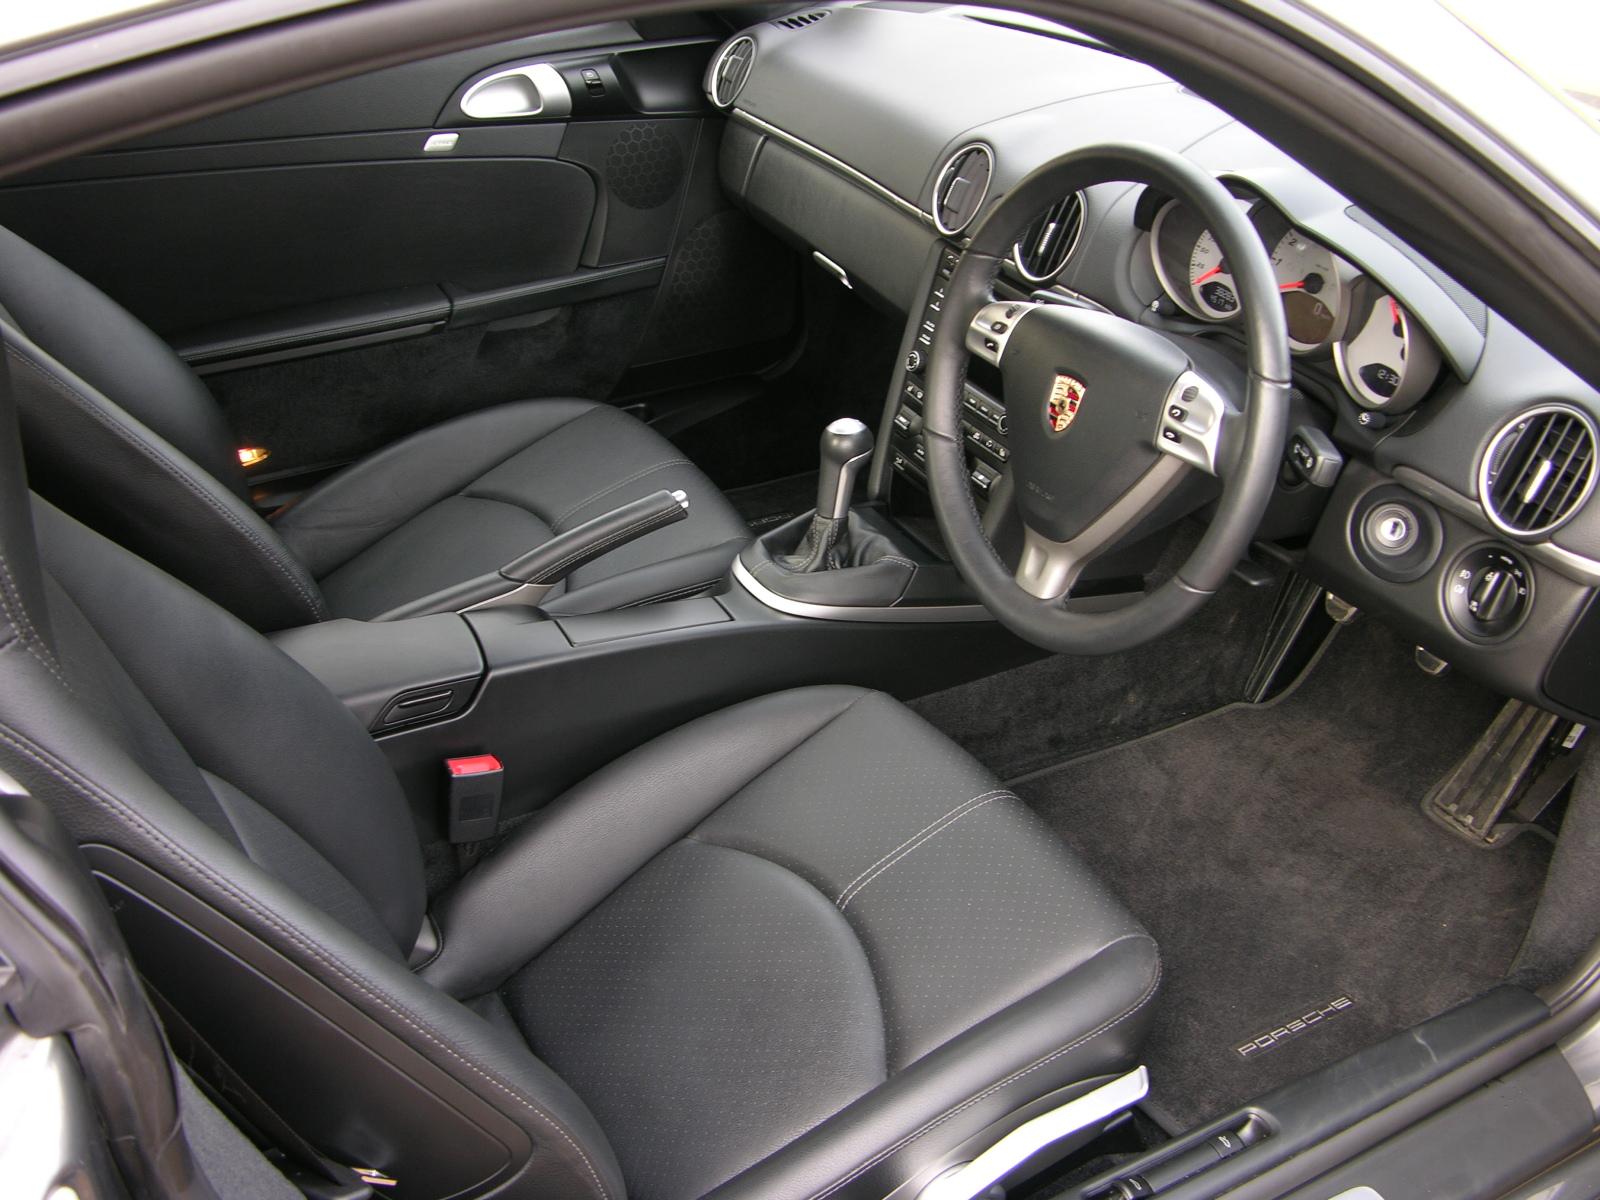 File:2009 Porsche Cayman S - Flickr - The Car Spy (11).jpg - Wikimedia  Commons